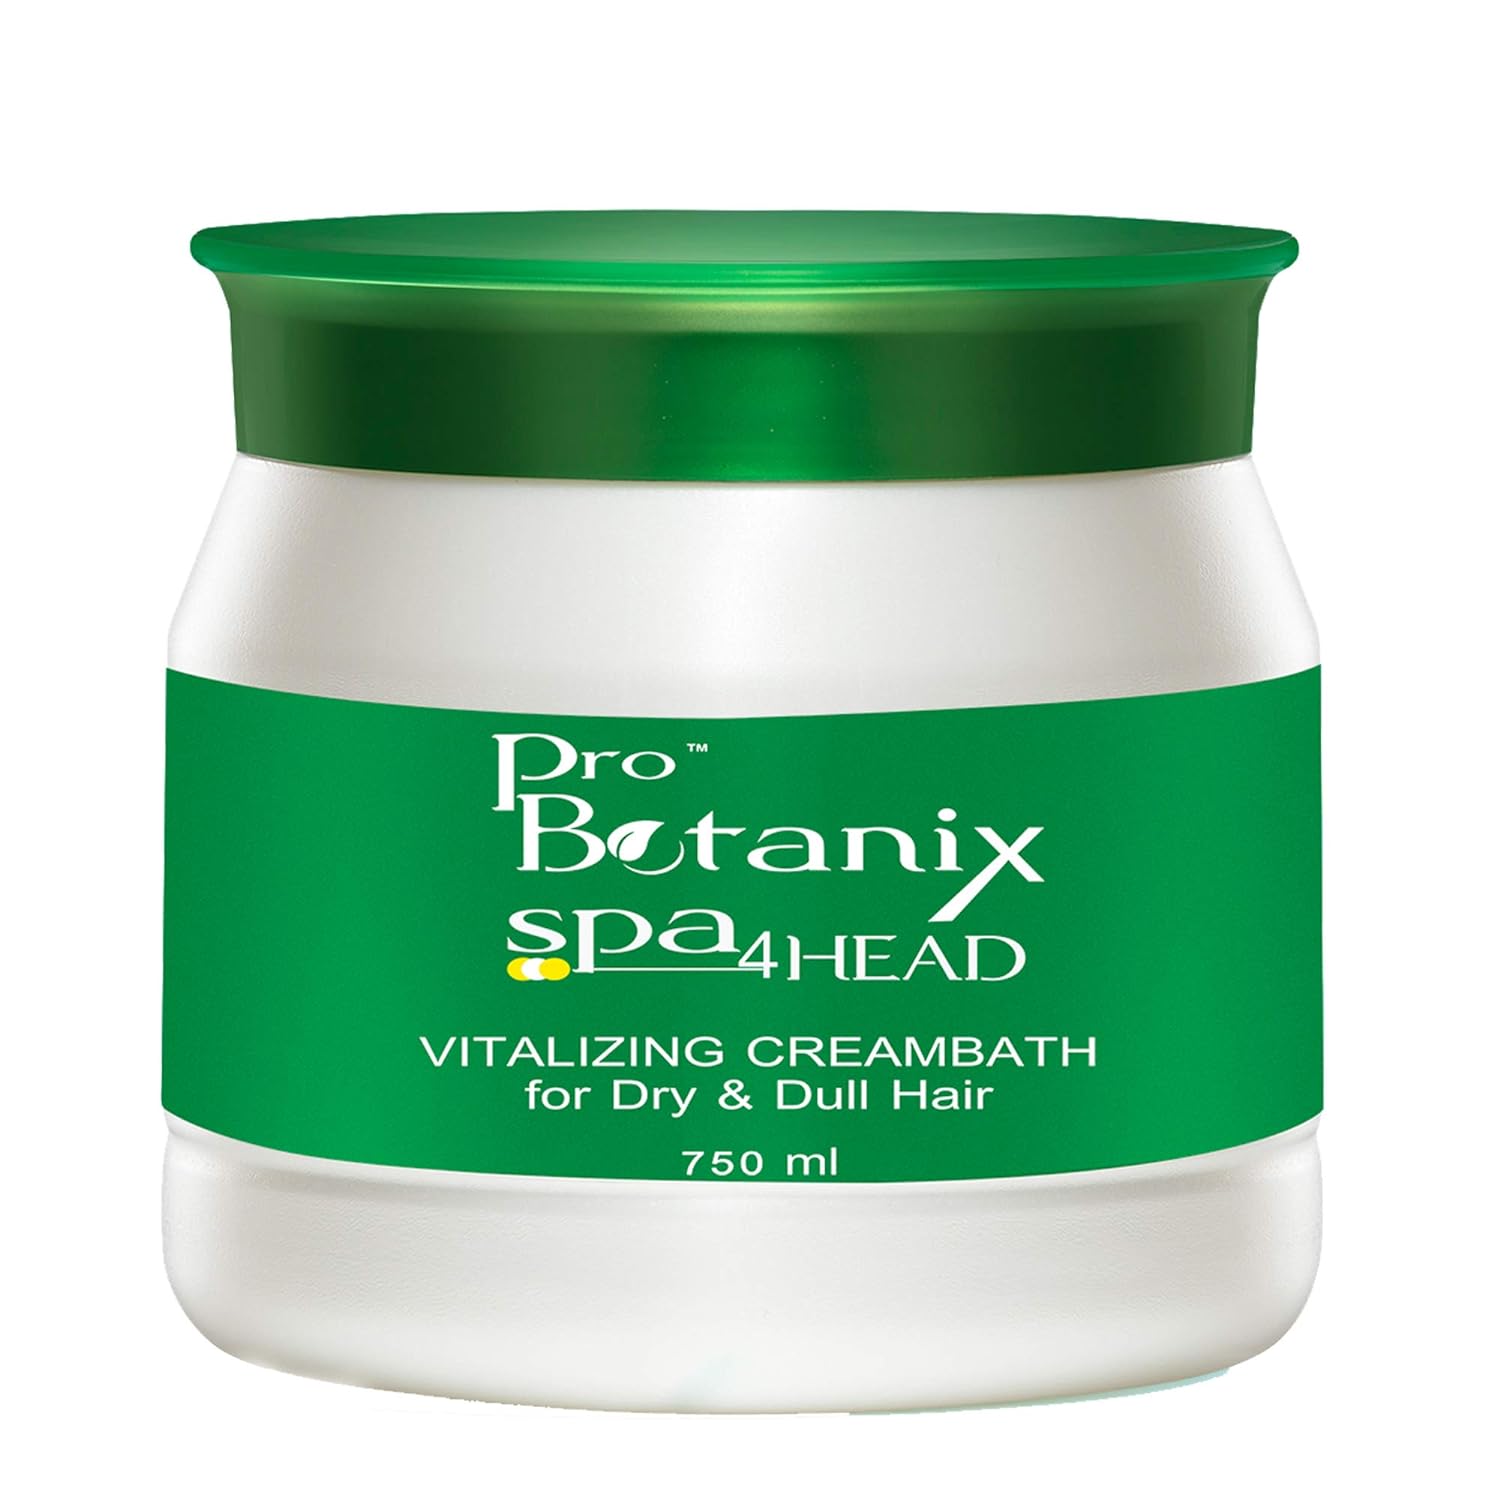 Raaga Professional Pro Botanix Spa4head Vitalizing Creambath, 750 g